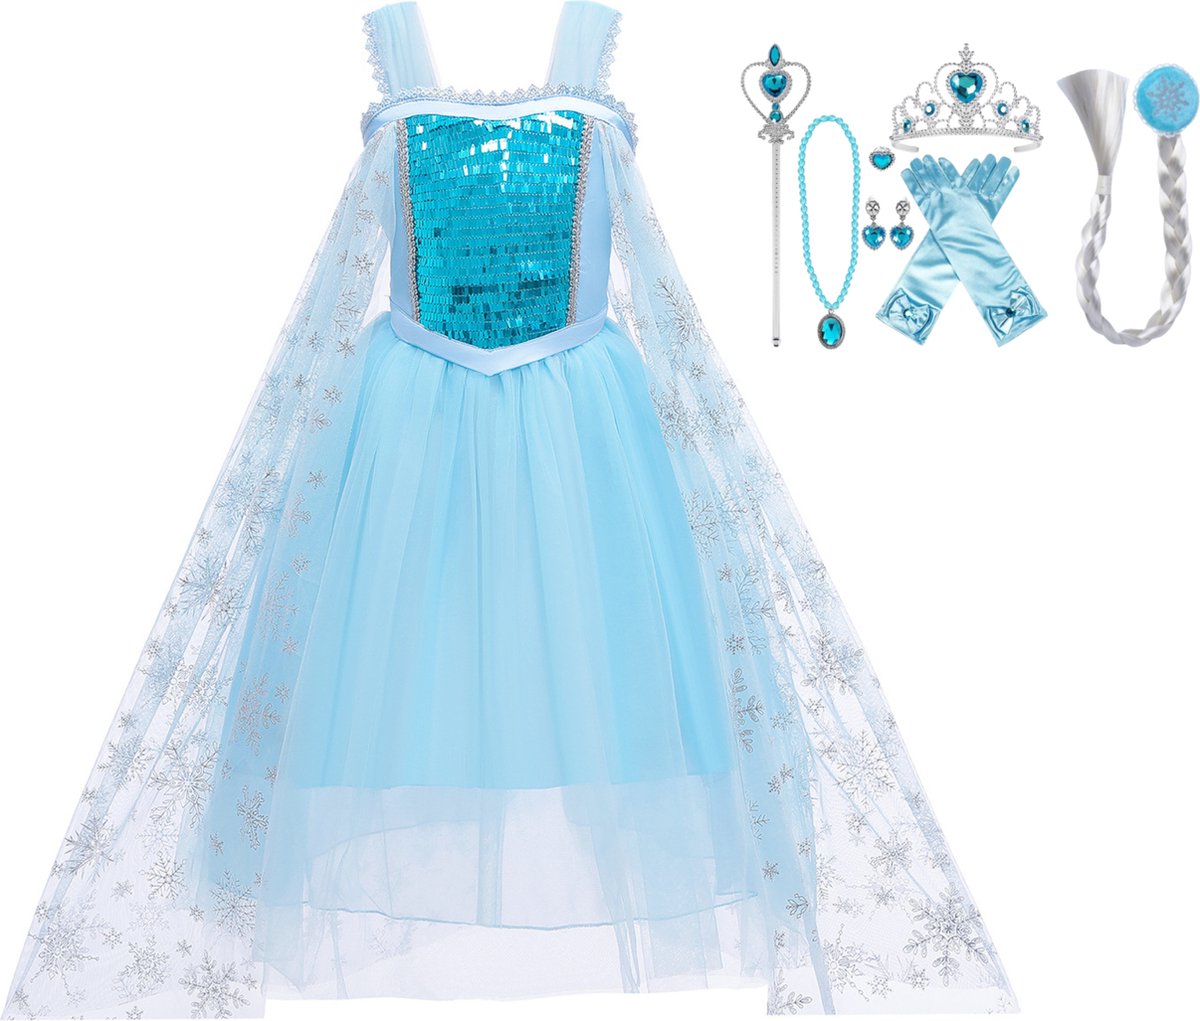 Joya Kids® Blauwe Prinsessenjurk meisje | Luxe Verkleedjurk + Accessoires set | Verkleedkleding | Prinsessen speelgoed | Carnaval | Cadeau Meisje Sinterklaas | Maat 146-152 (150)